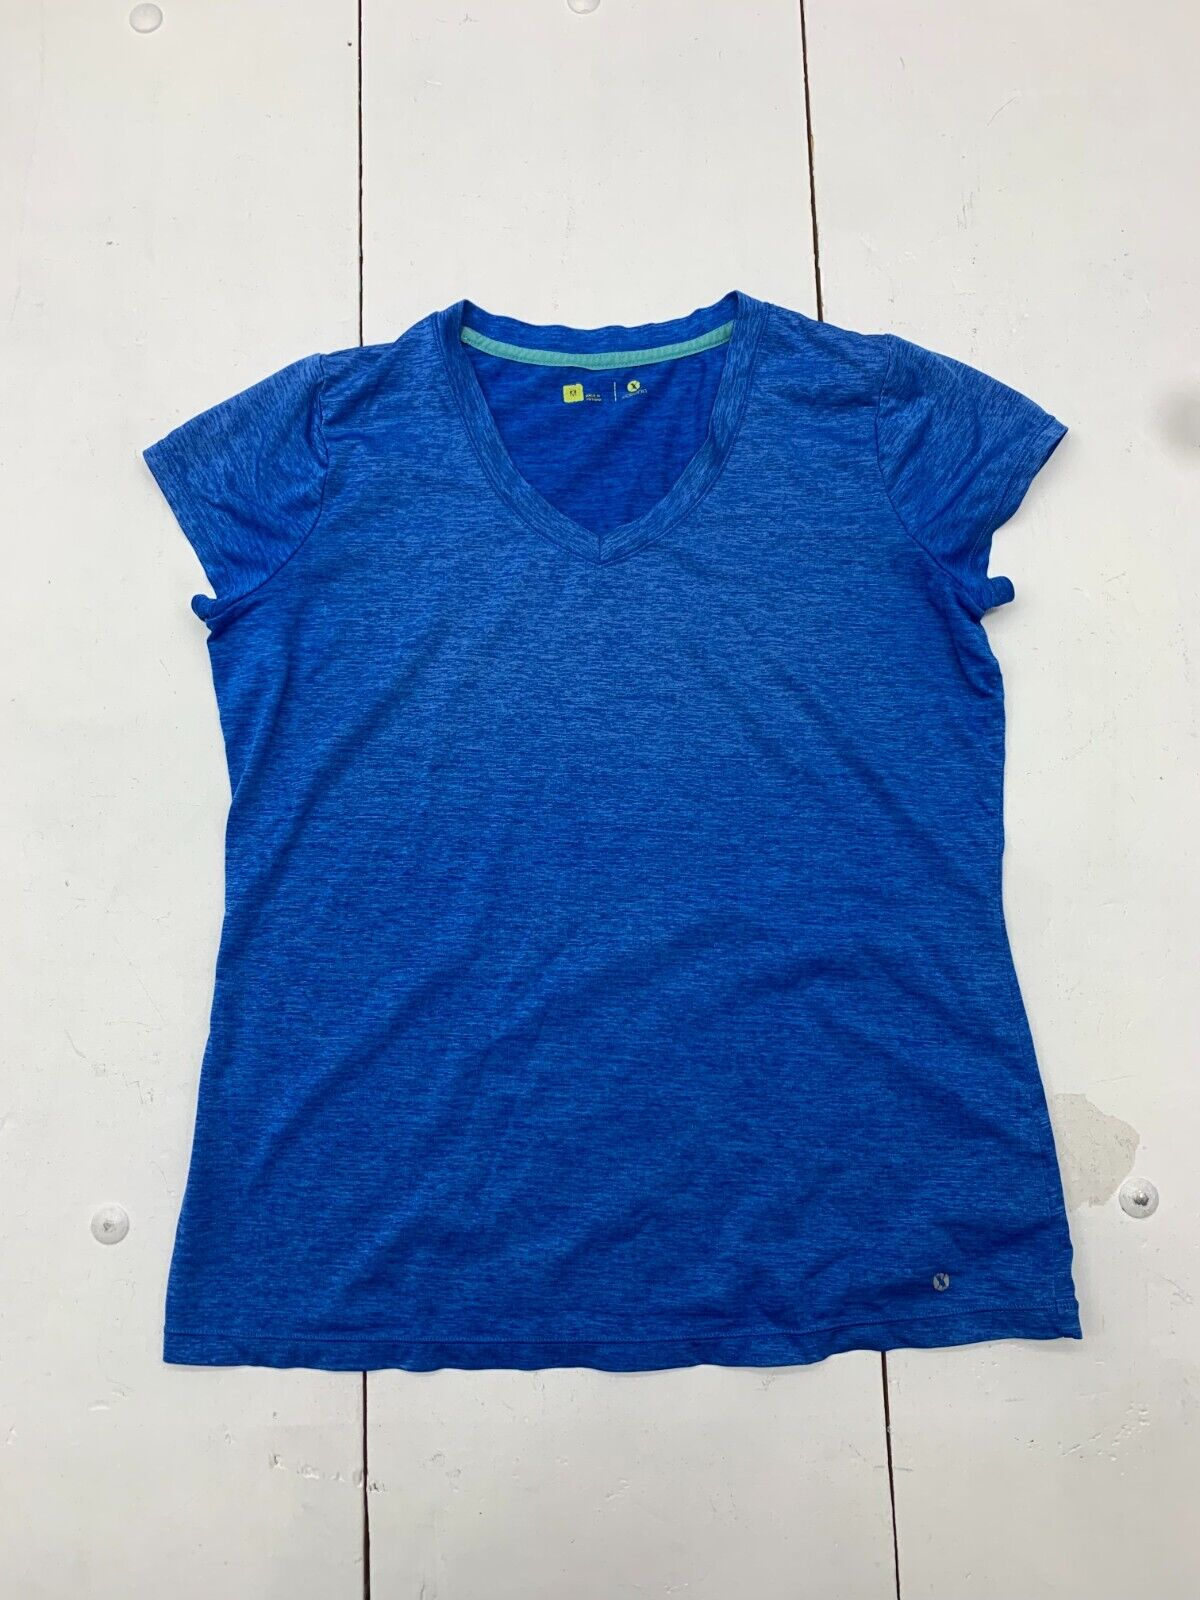 Xersion Womens Blue Athletic Short Sleeve Shirt Size Medium